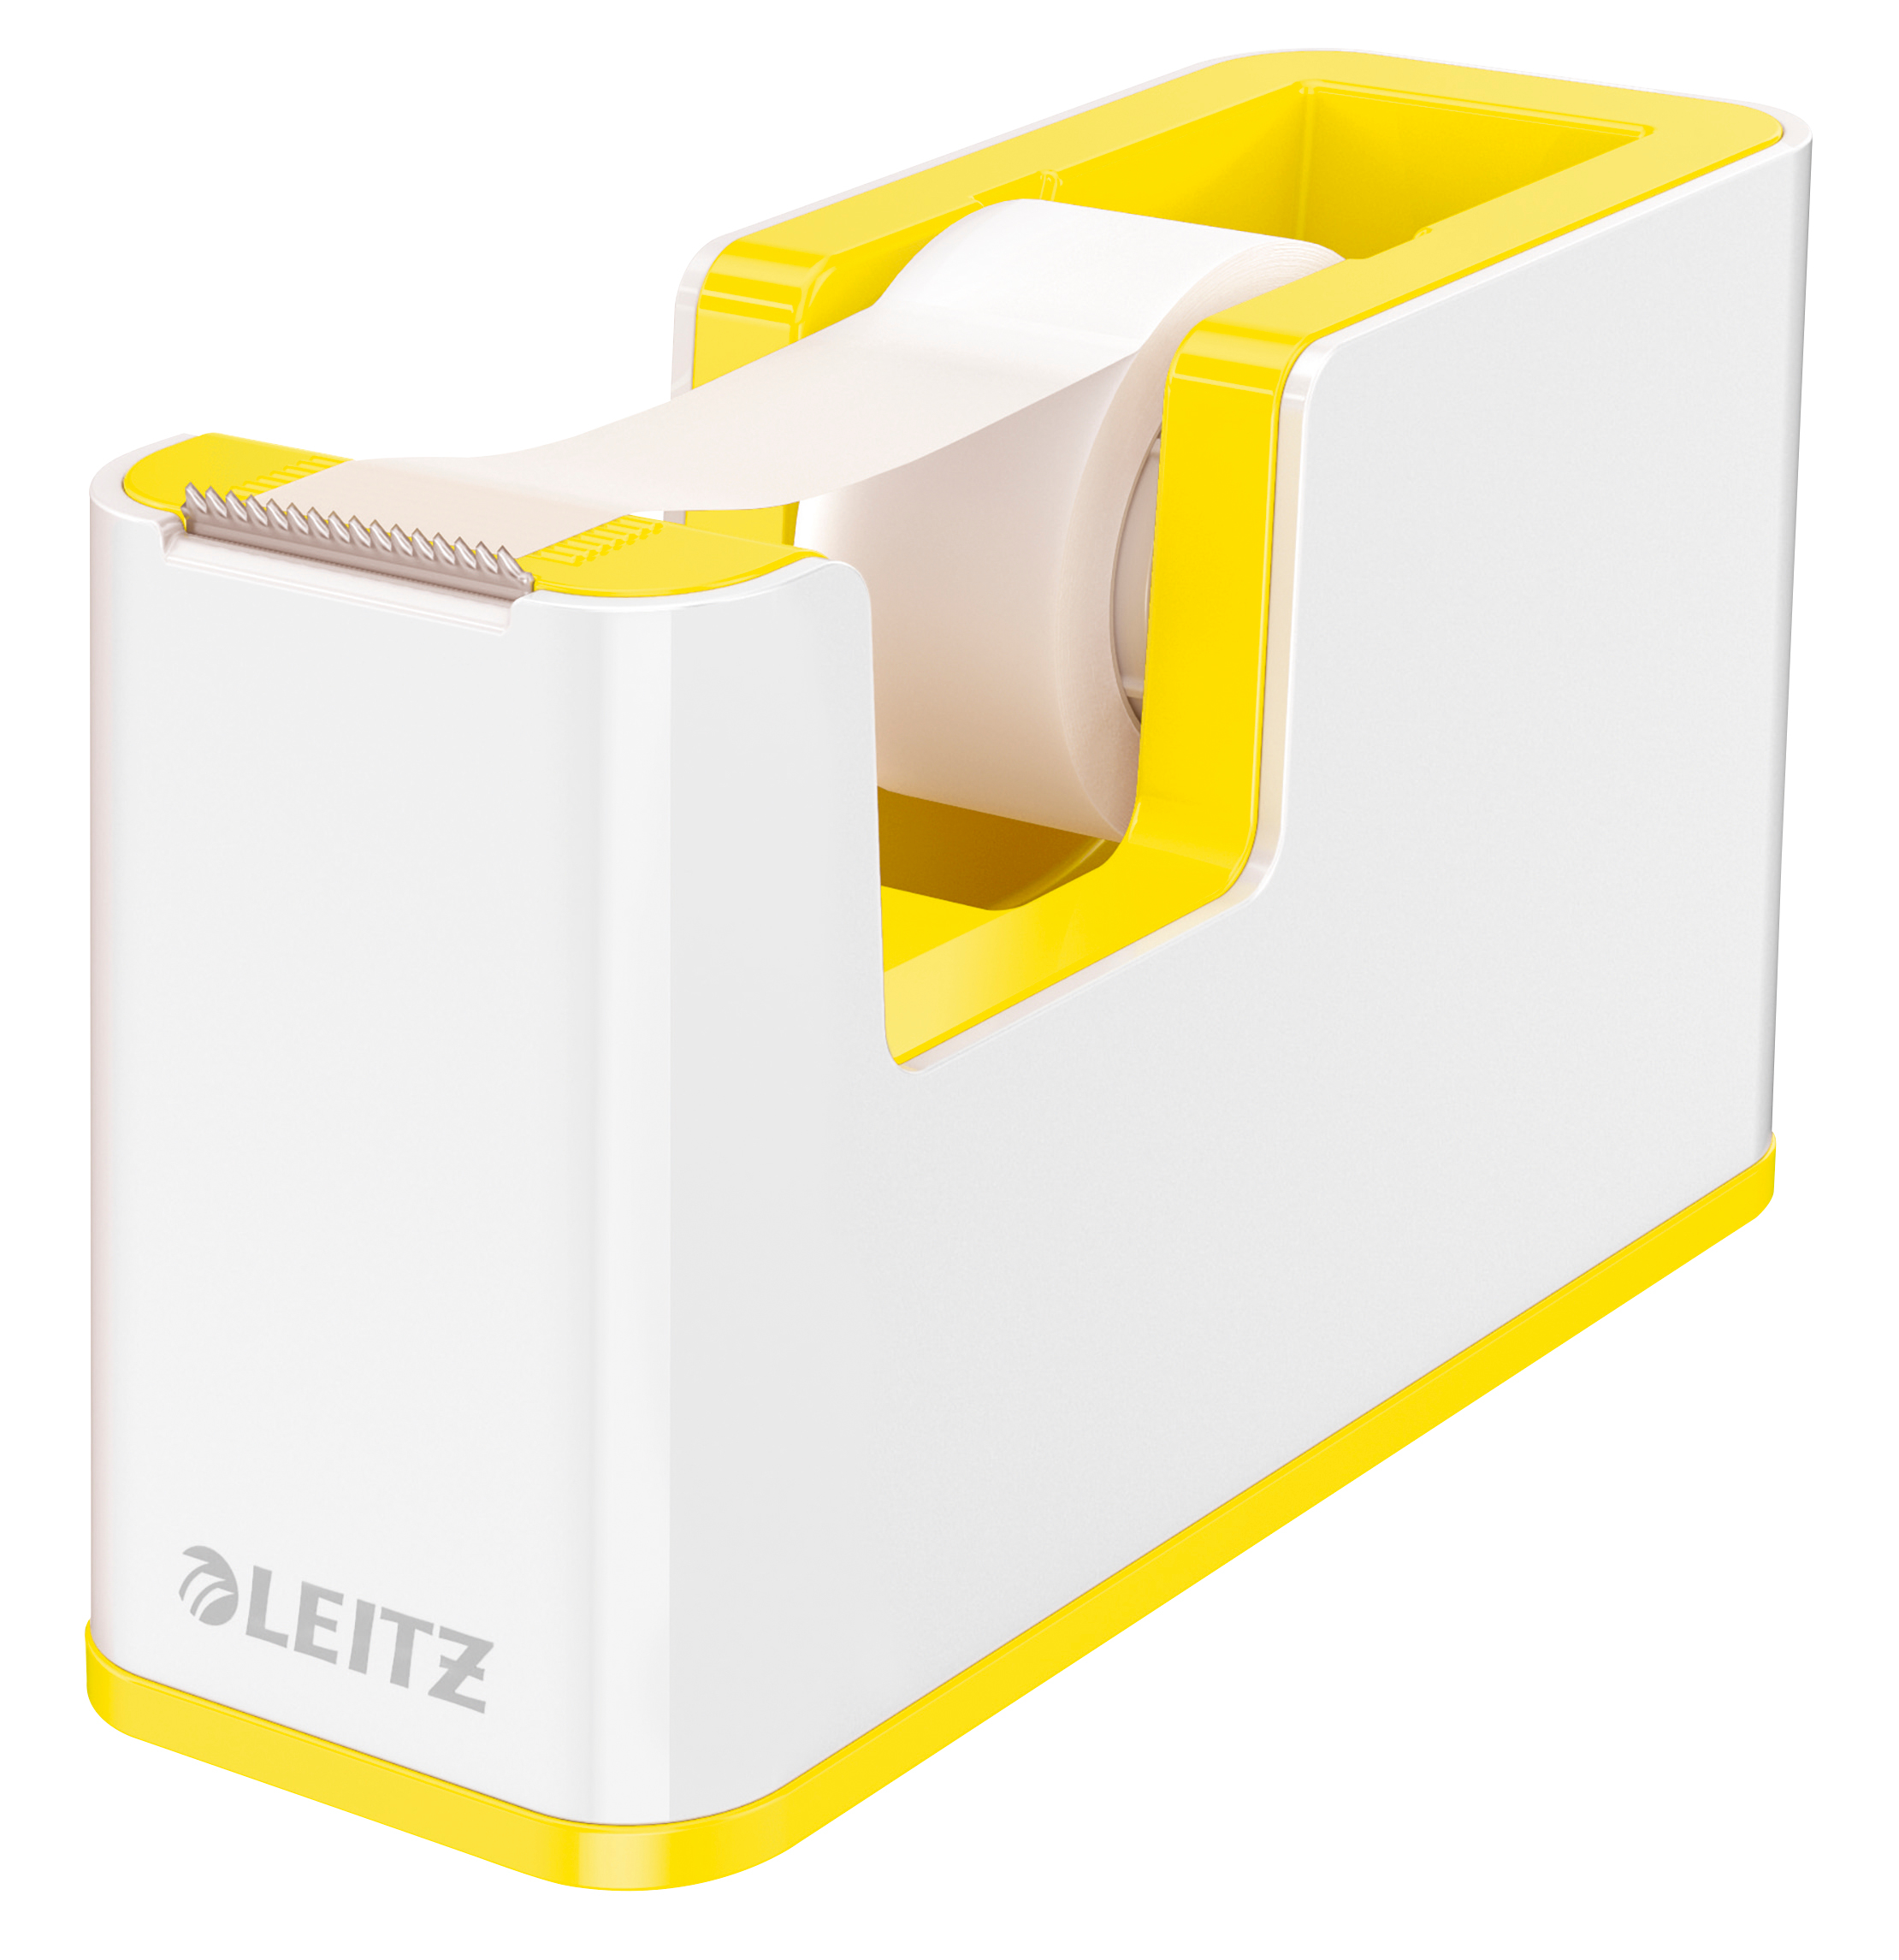 LEITZ Tape Dispenser WOW 19mmx33m 5364-10-16 blanc/jaune blanc/jaune